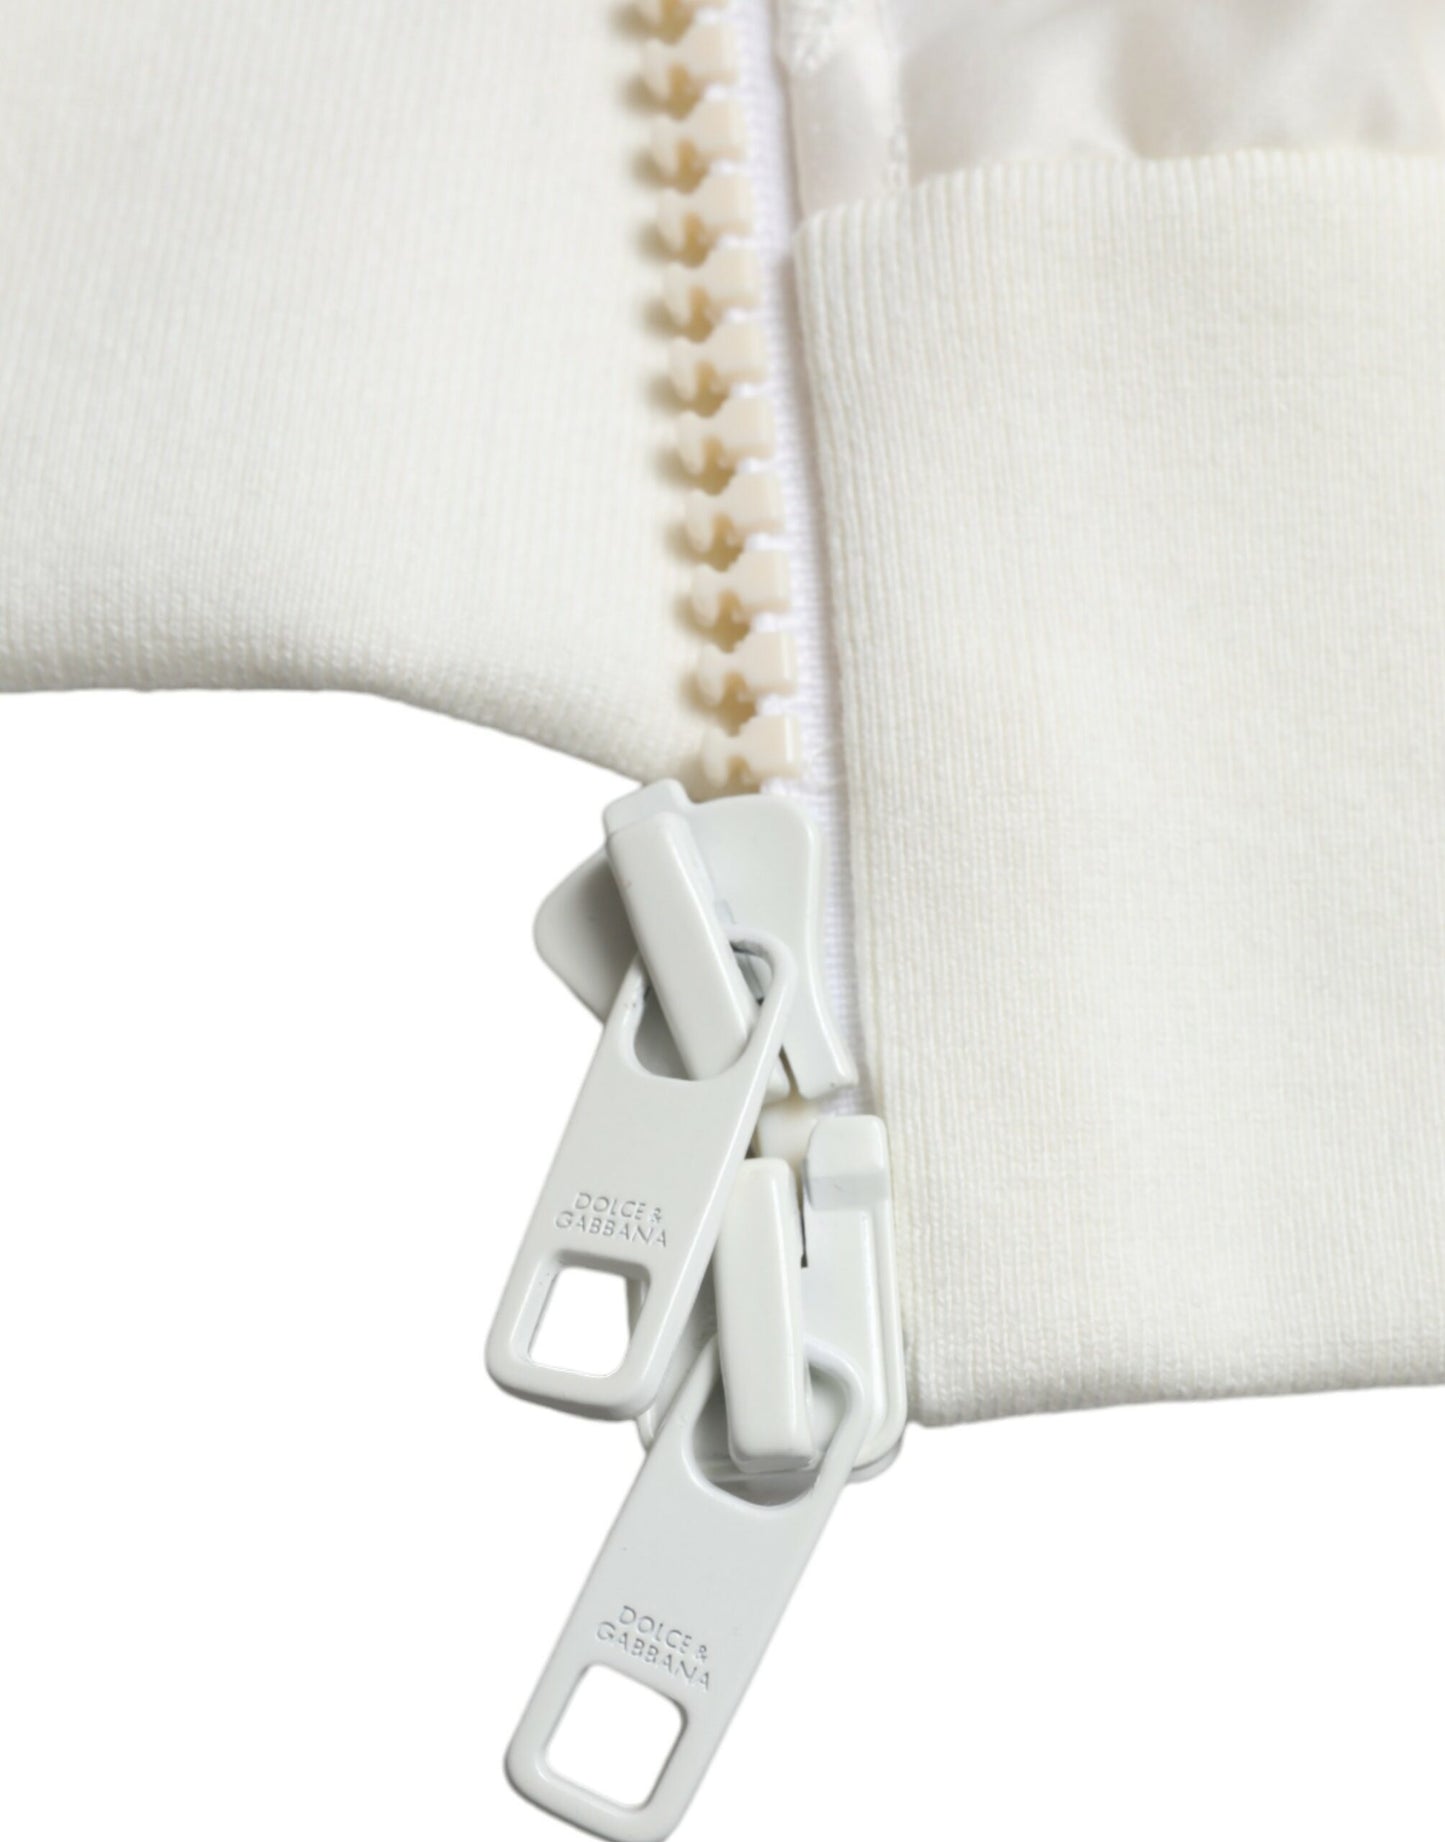 Dolce & Gabbana White Floral Lace Silk Full Zip Bomber Jacket - DEA STILOSA MILANO